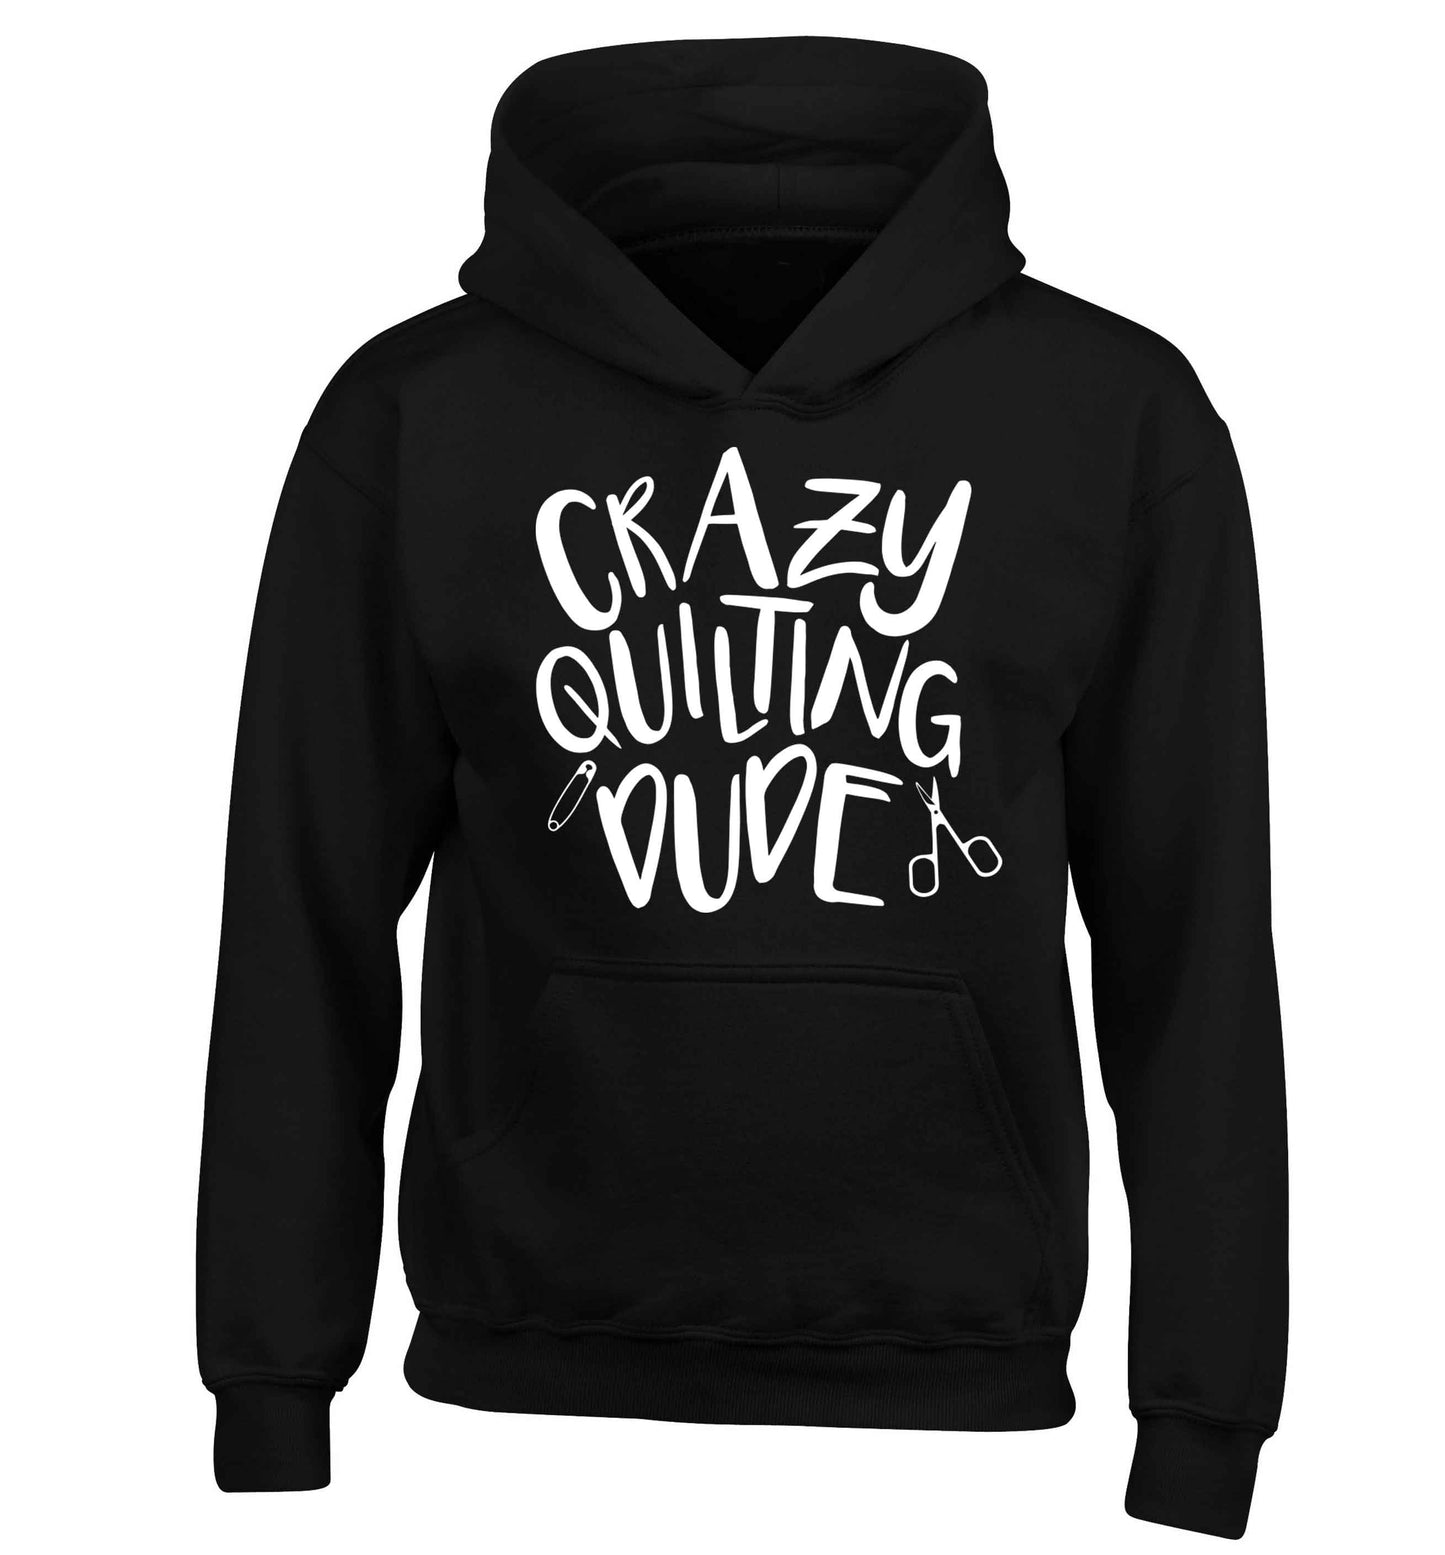 Crazy quilting dude children's black hoodie 12-13 Years